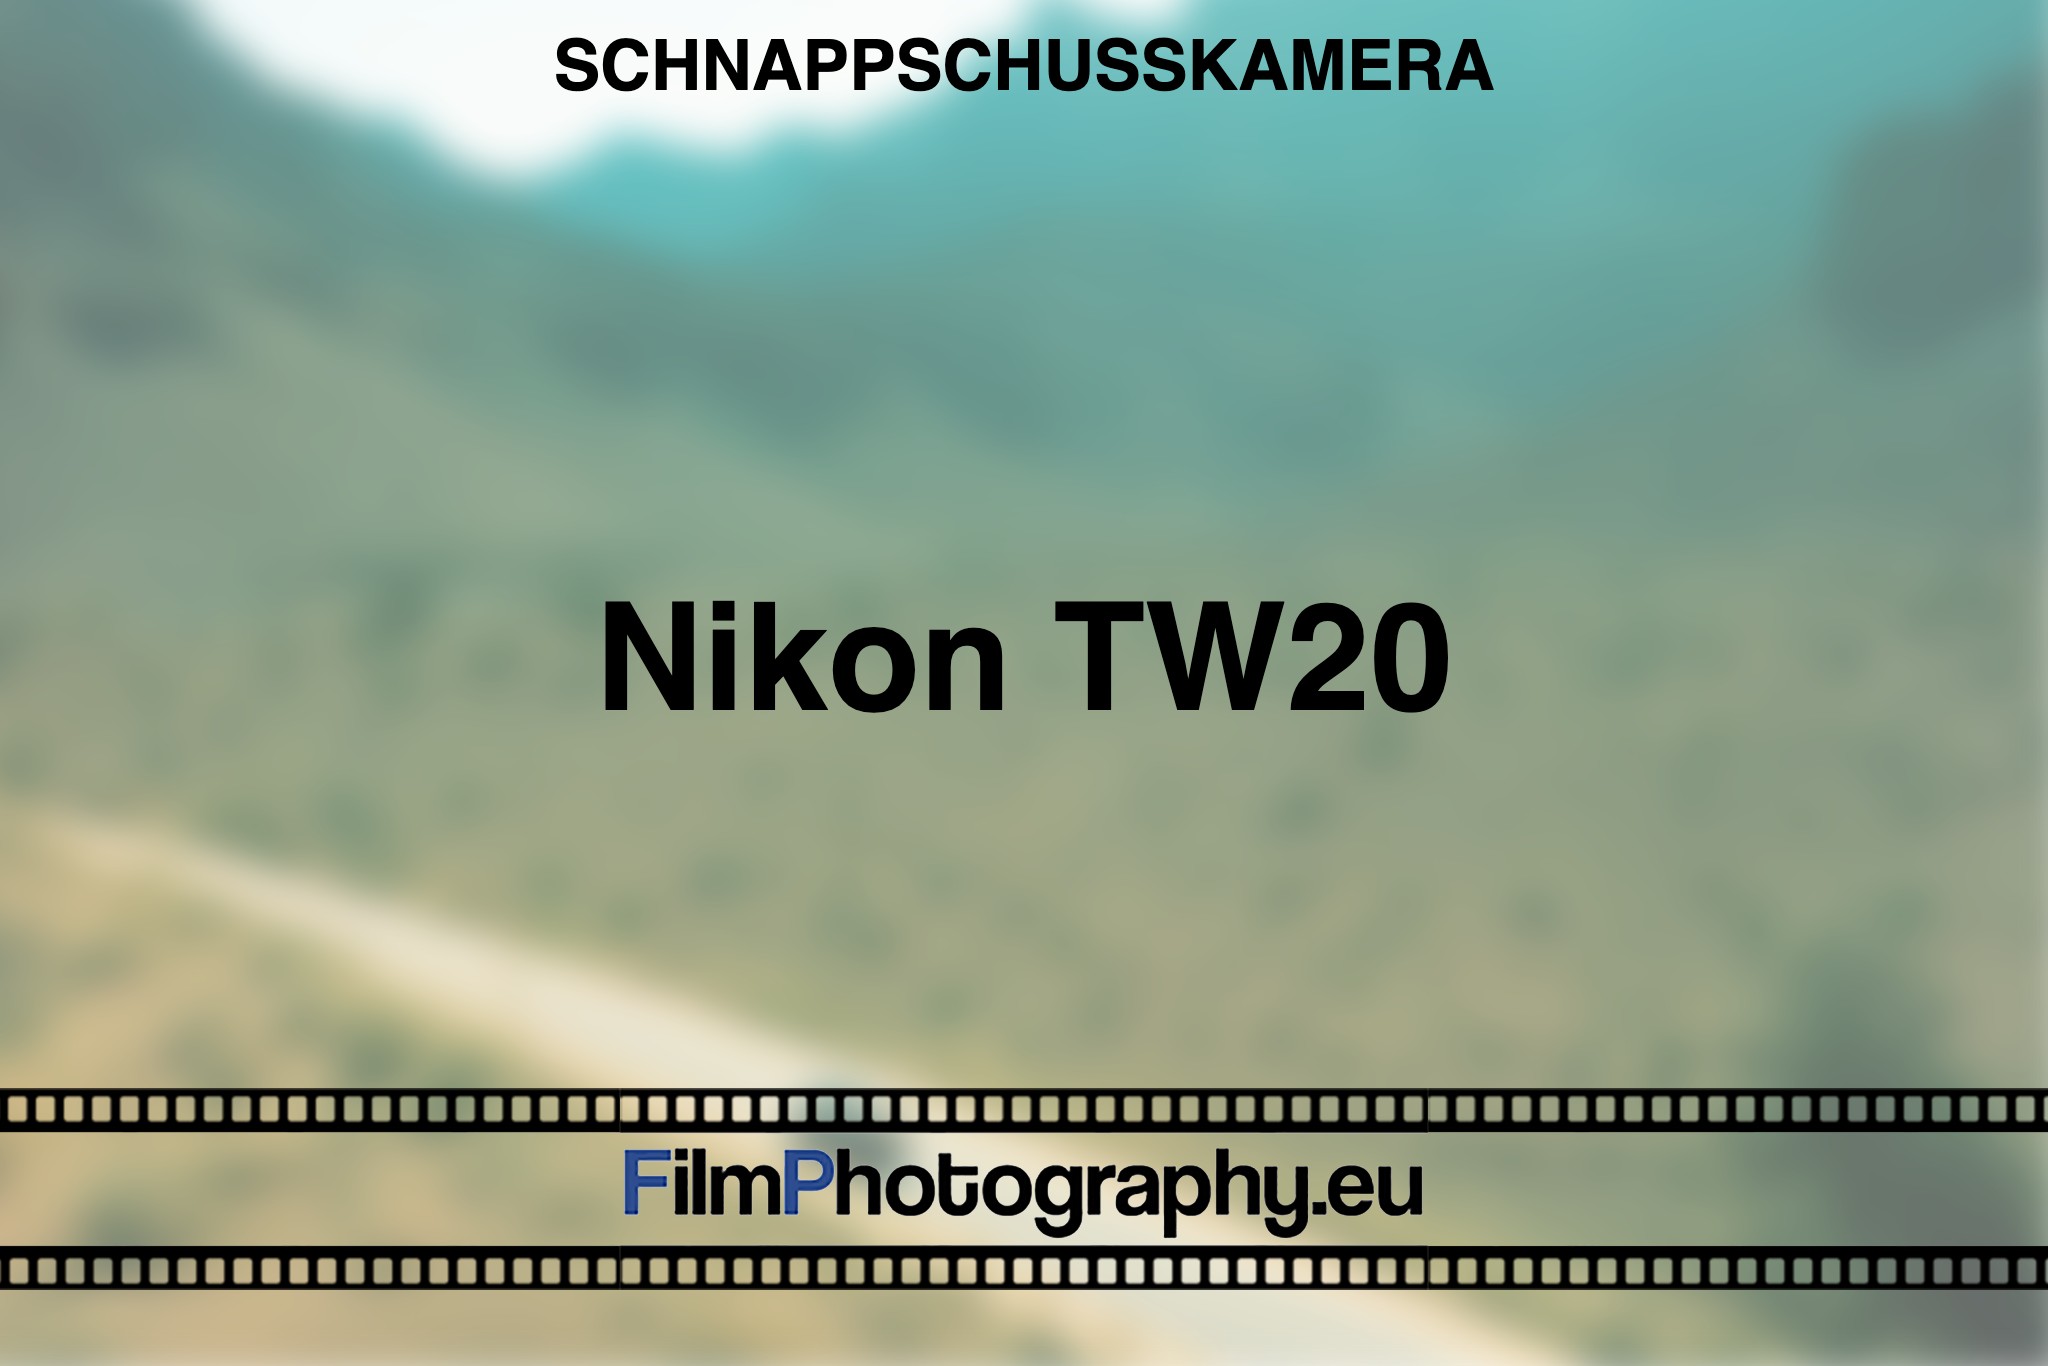 nikon-tw20-schnappschusskamera-bnv